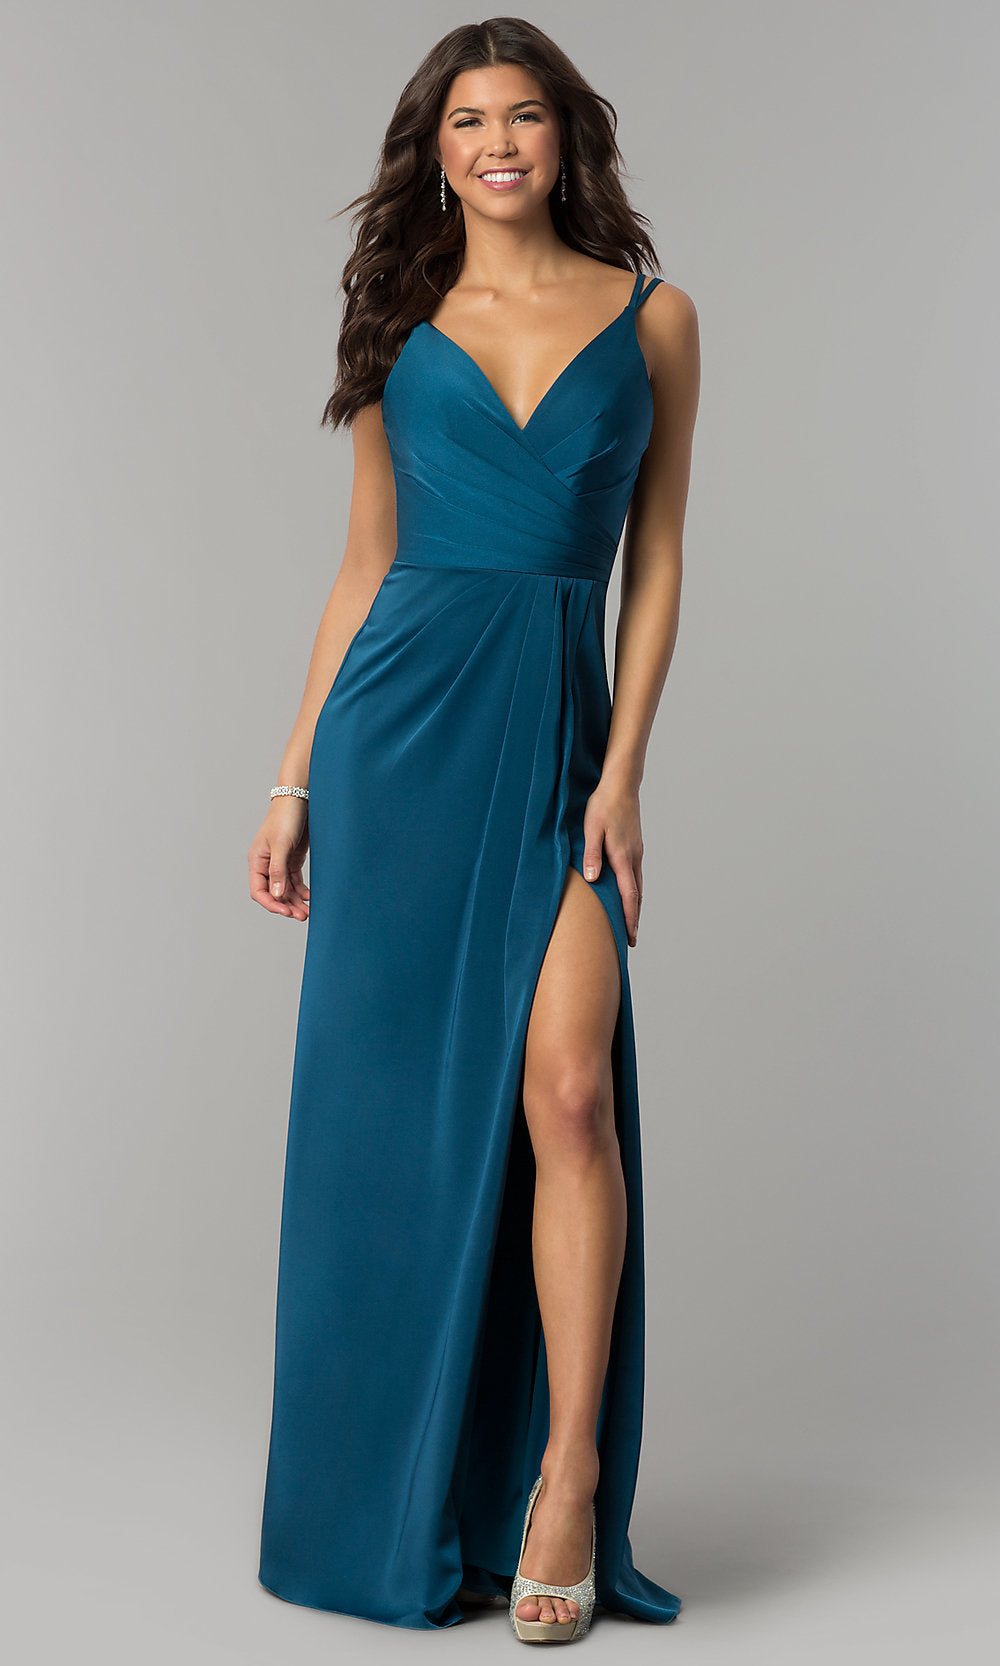 Faviana V-Neck Ruched Open-Back Floor Length Dress